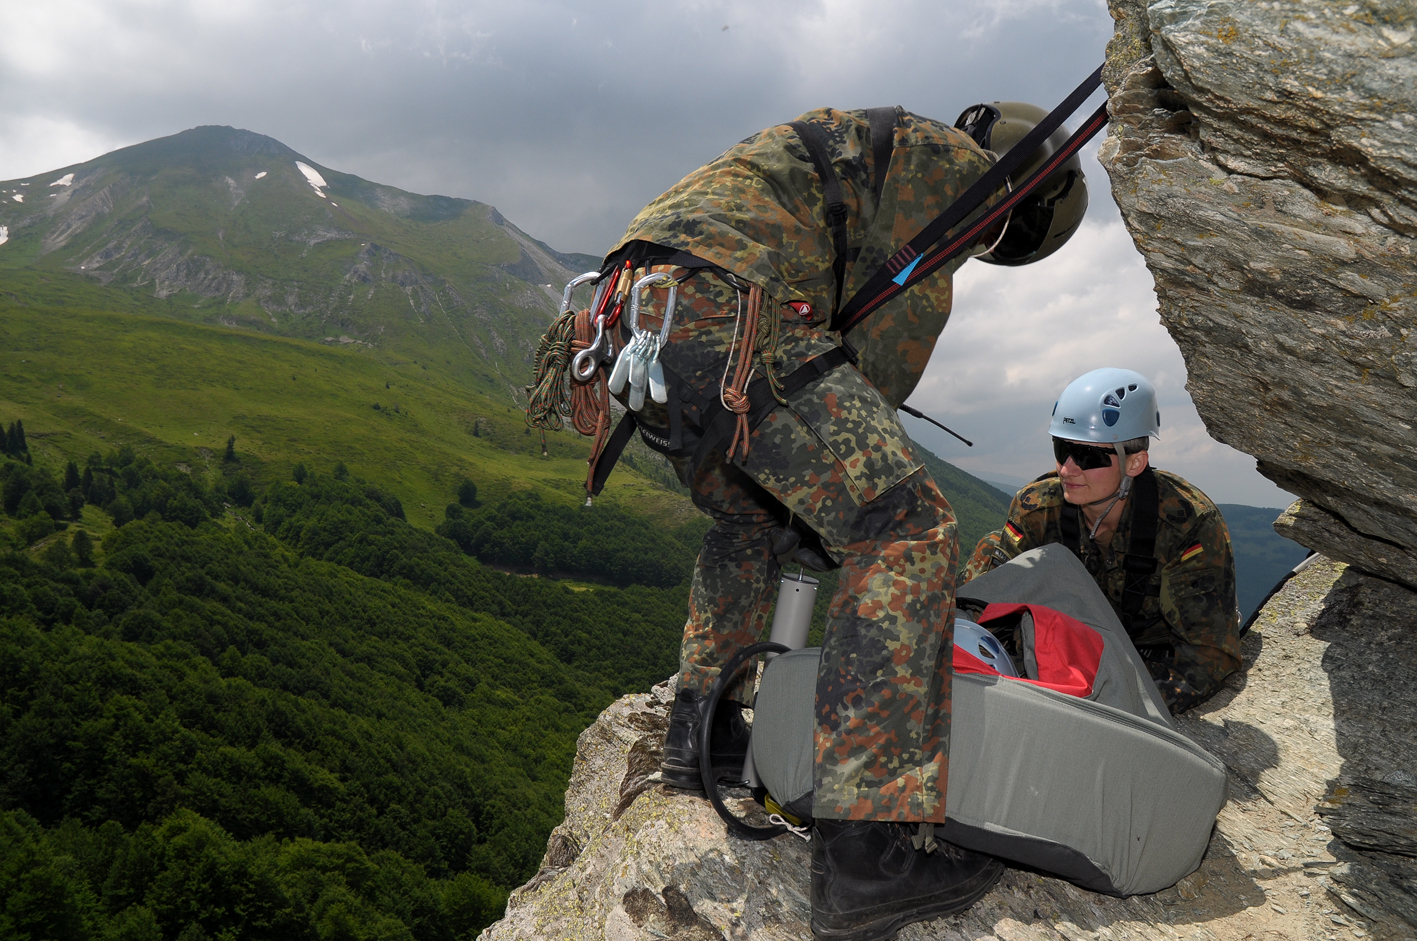 Bergrettungsübung der Kosovo-Force, Šar-Planina-Gebirge, Kosovo. © Tobias Strahl